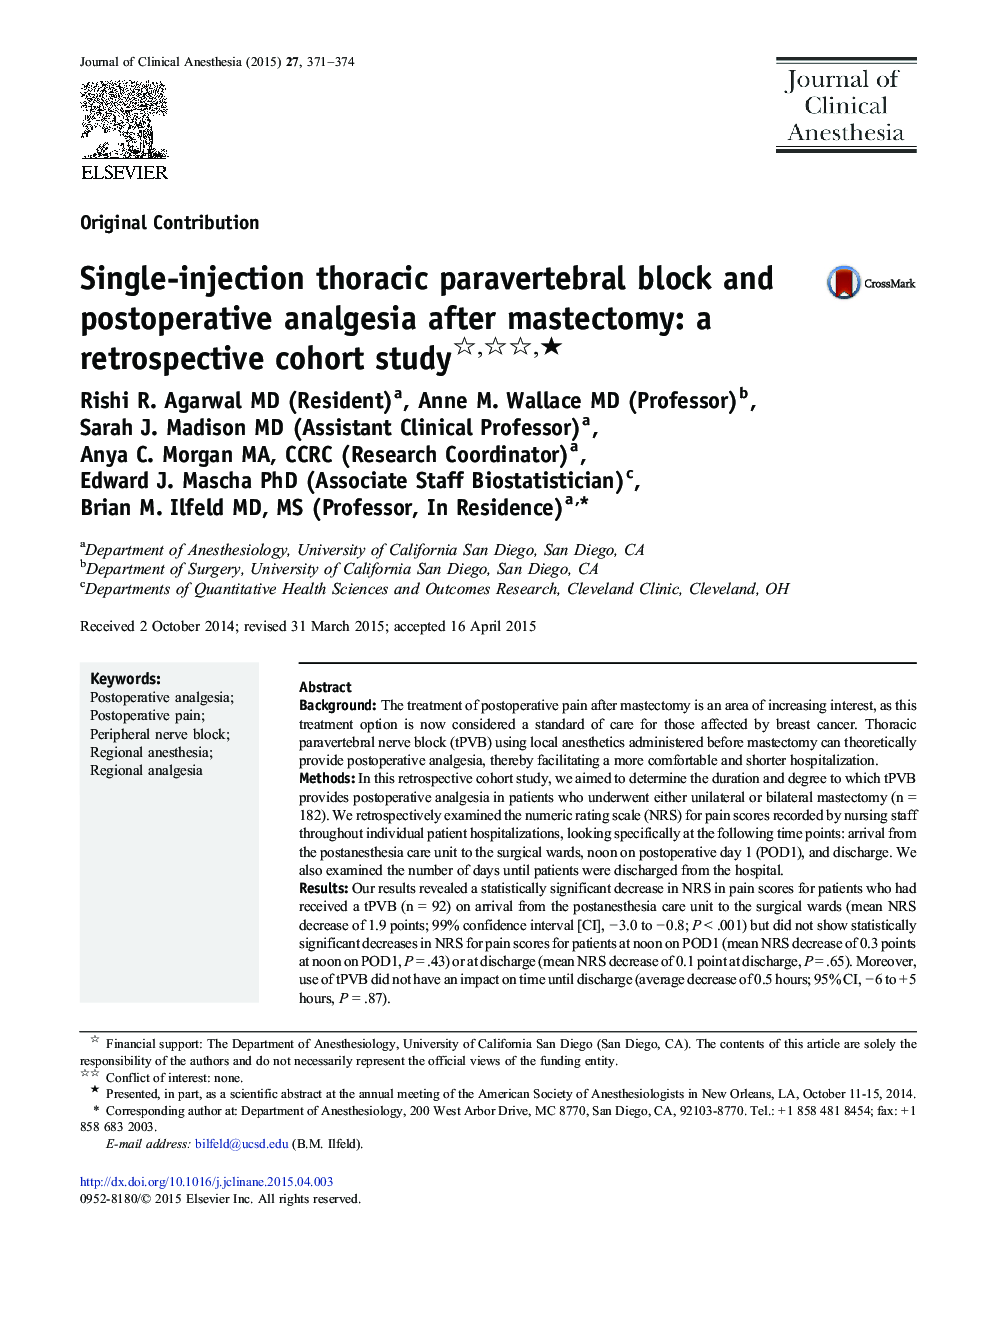 Single-injection thoracic paravertebral block and postoperative analgesia after mastectomy: a retrospective cohort study ★